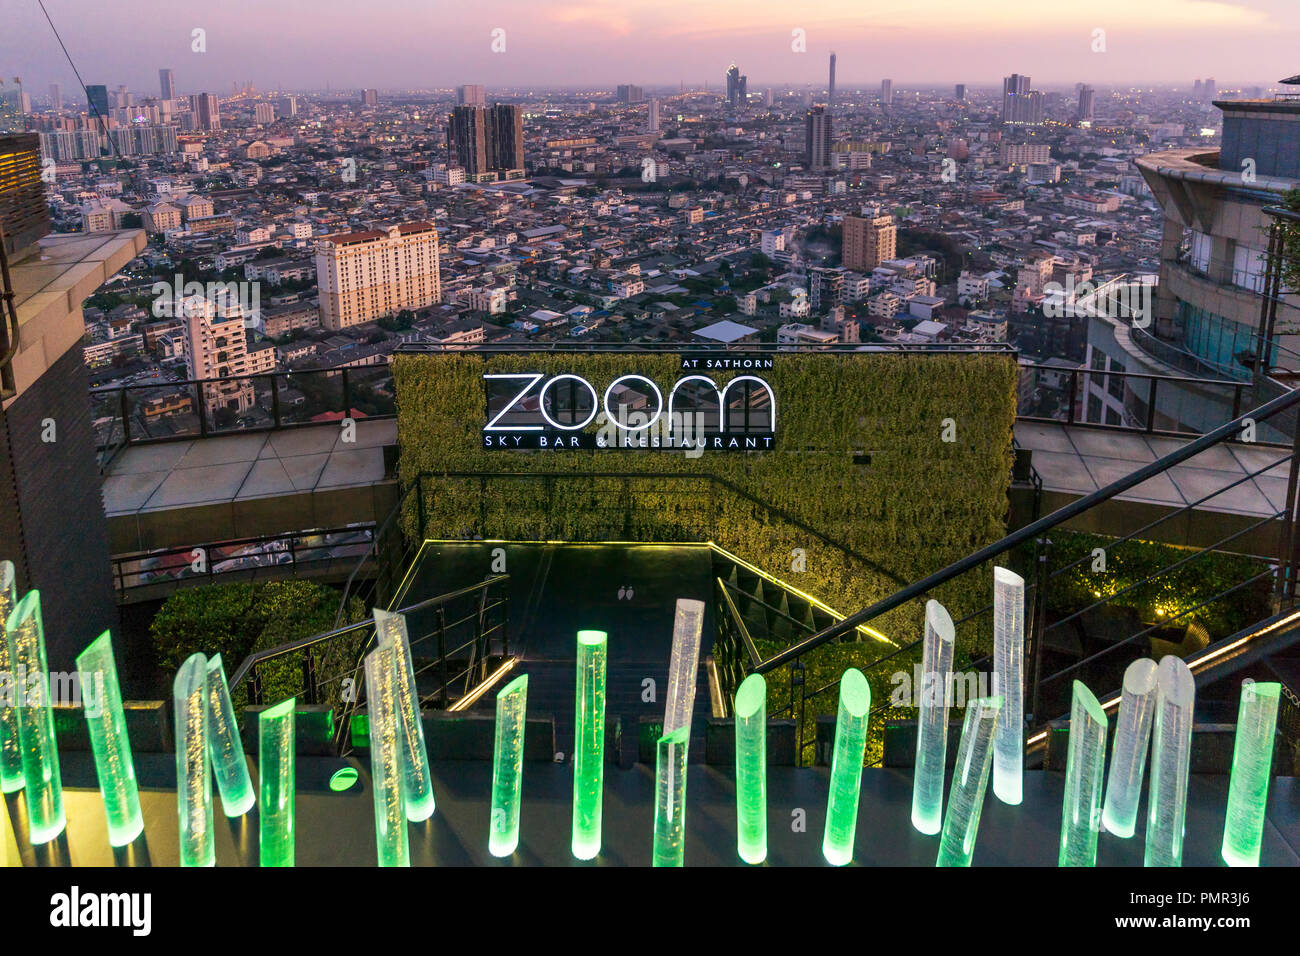 Zoom Sky Bar, Anantara Sathorn Hotel , rooftop bar, Bangkok, Thailand, Stock Photo